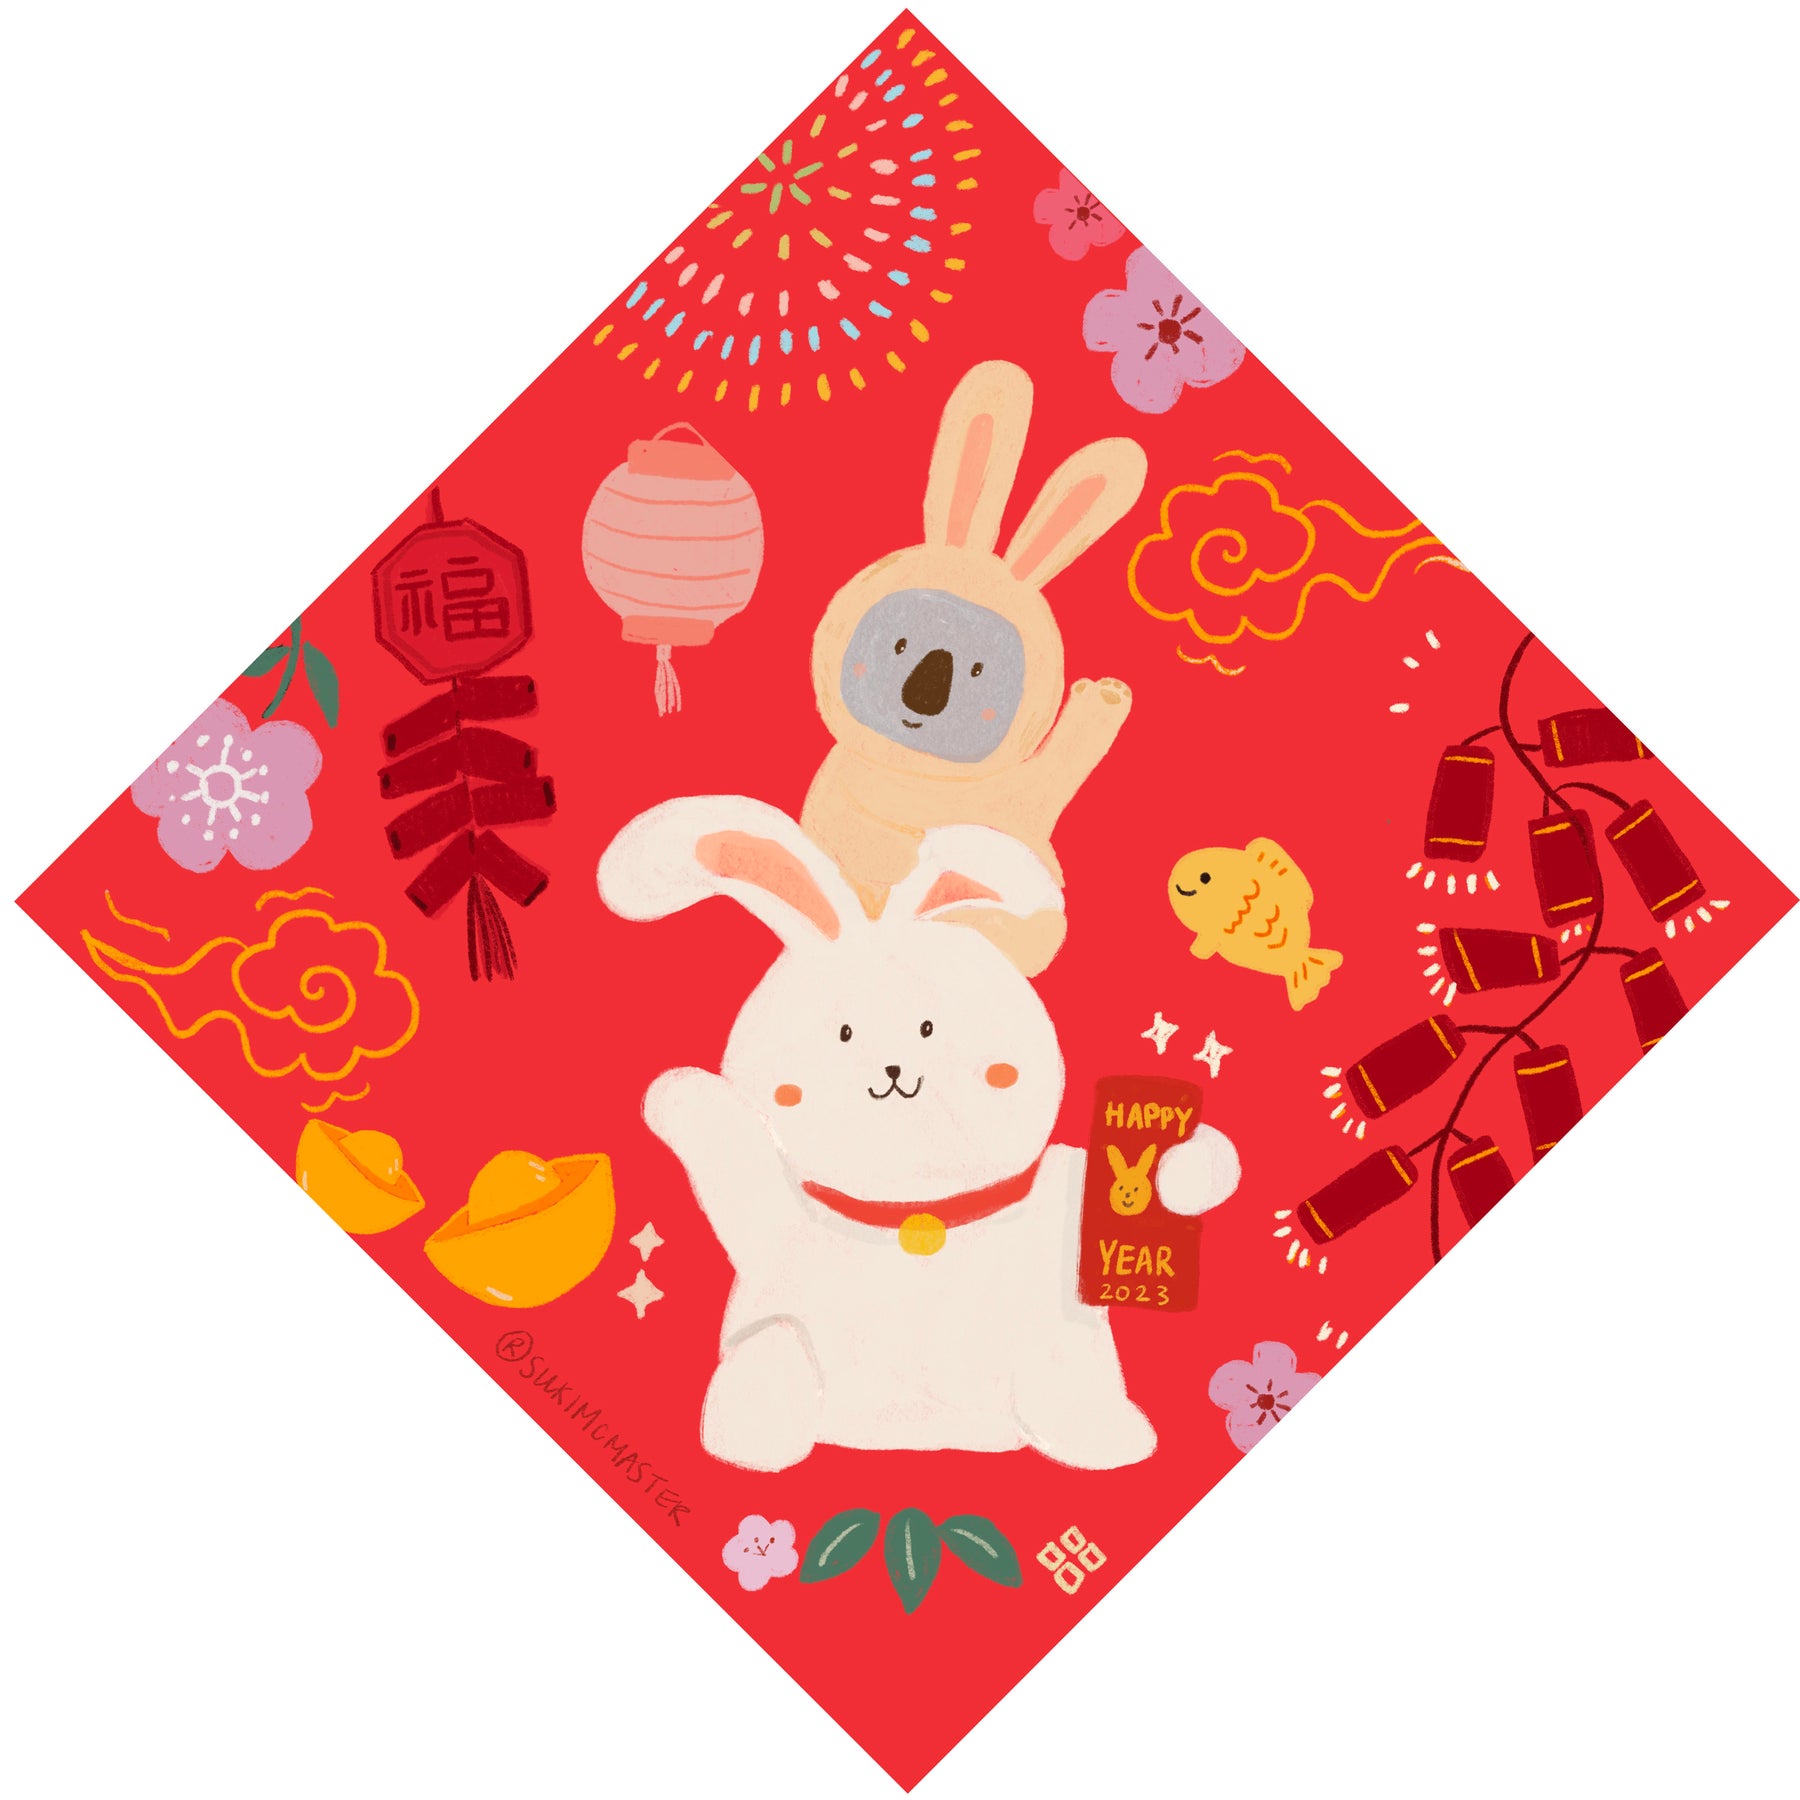 Suki McMaster Melbourne Artist Lunar New Year Illustration Year of Rabbit